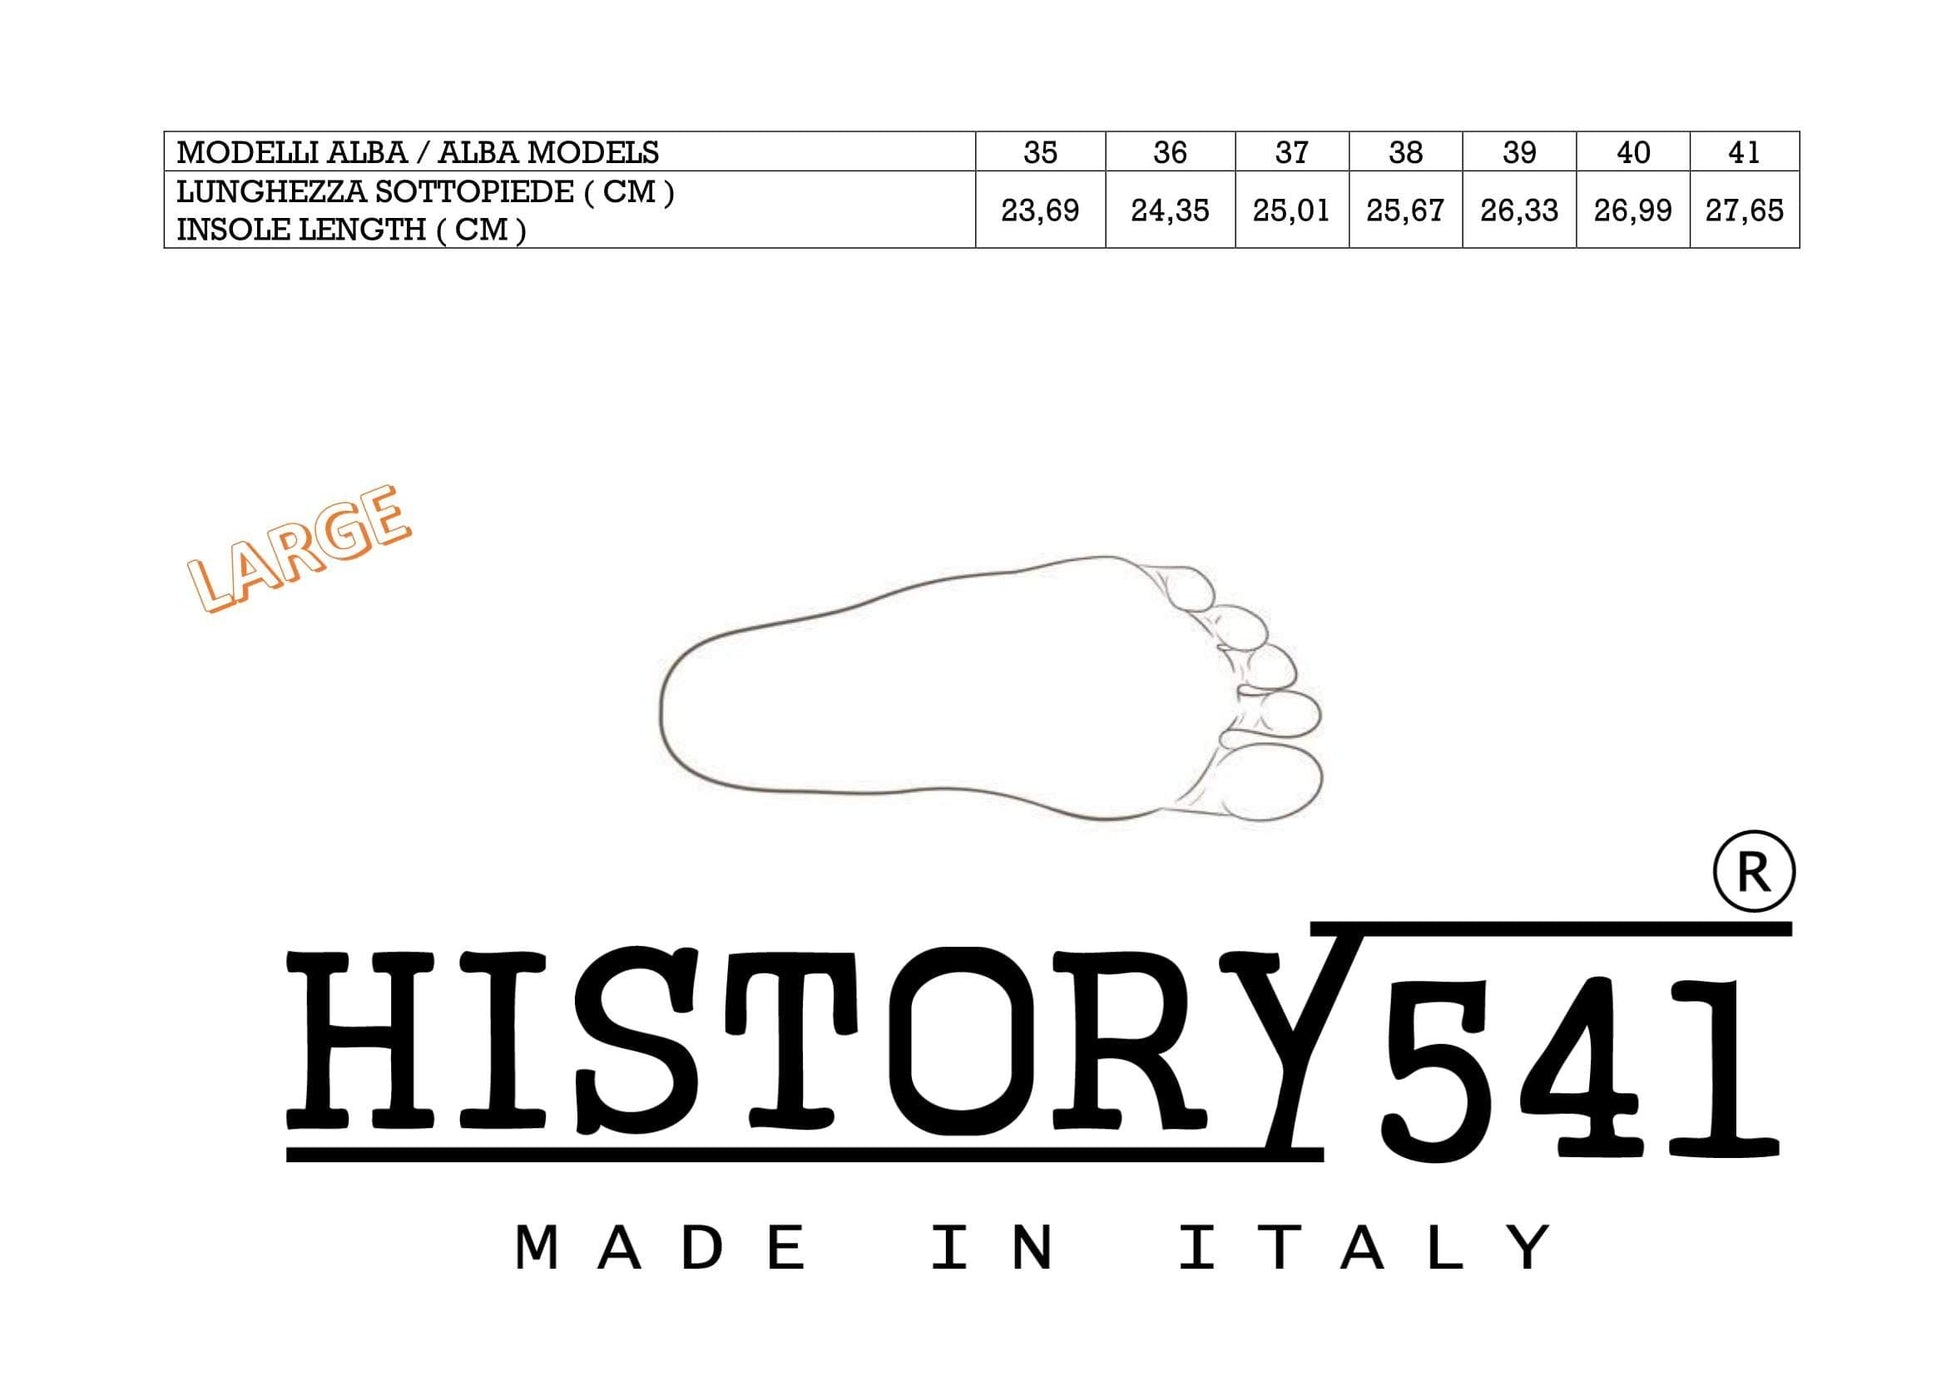 ALBA 6026 - 'Must Have' Boots Davis BLACK - History541